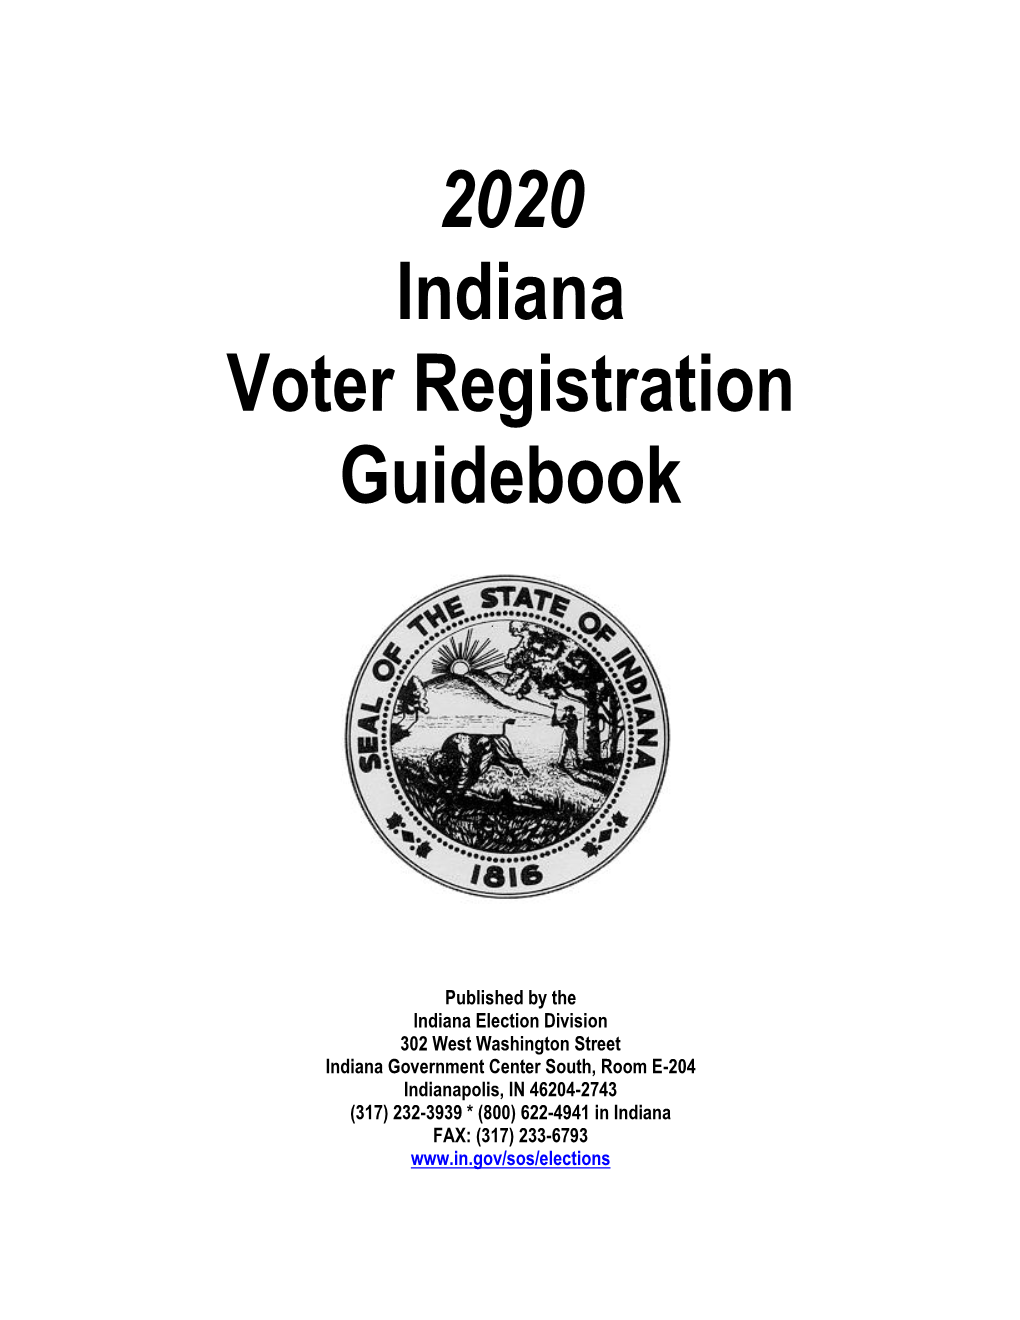 2020 Indiana Voter Registration Guidebook